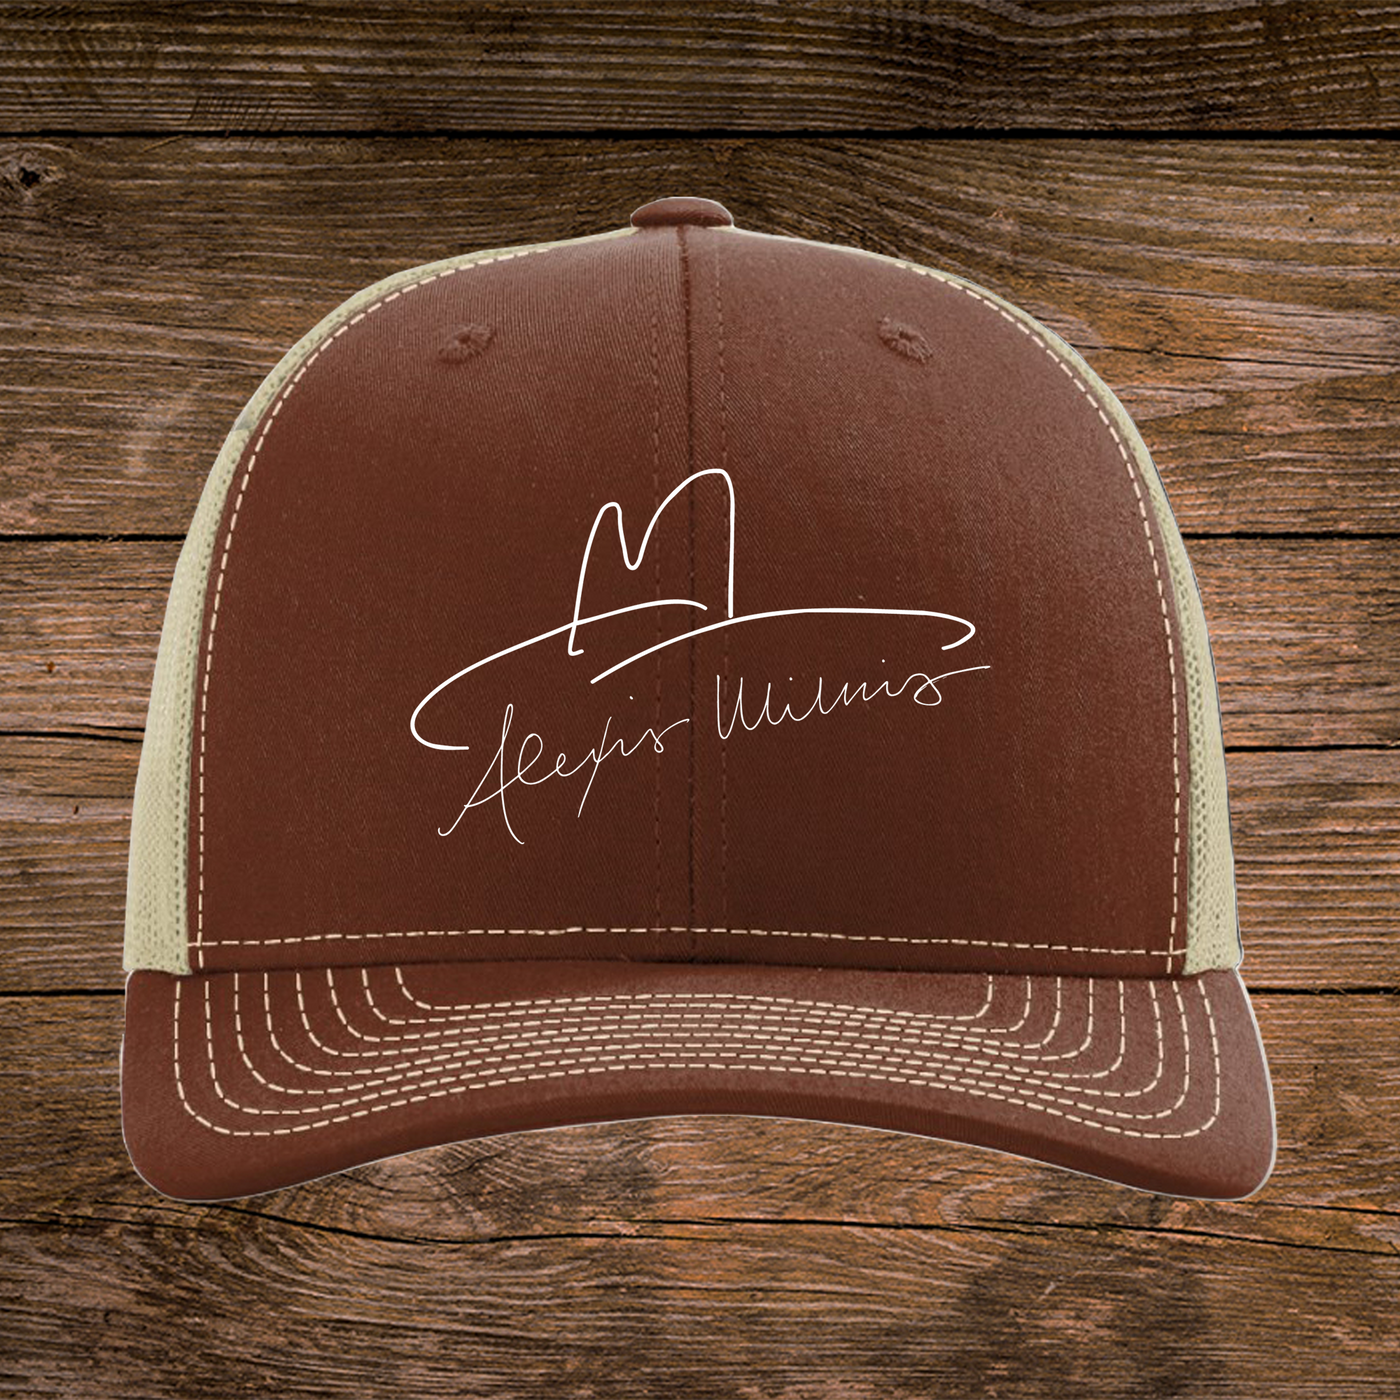 Alexis Wilkins Mid-Profile Hat, Brown/Khaki- Alexis Wilkins Official Merchandise